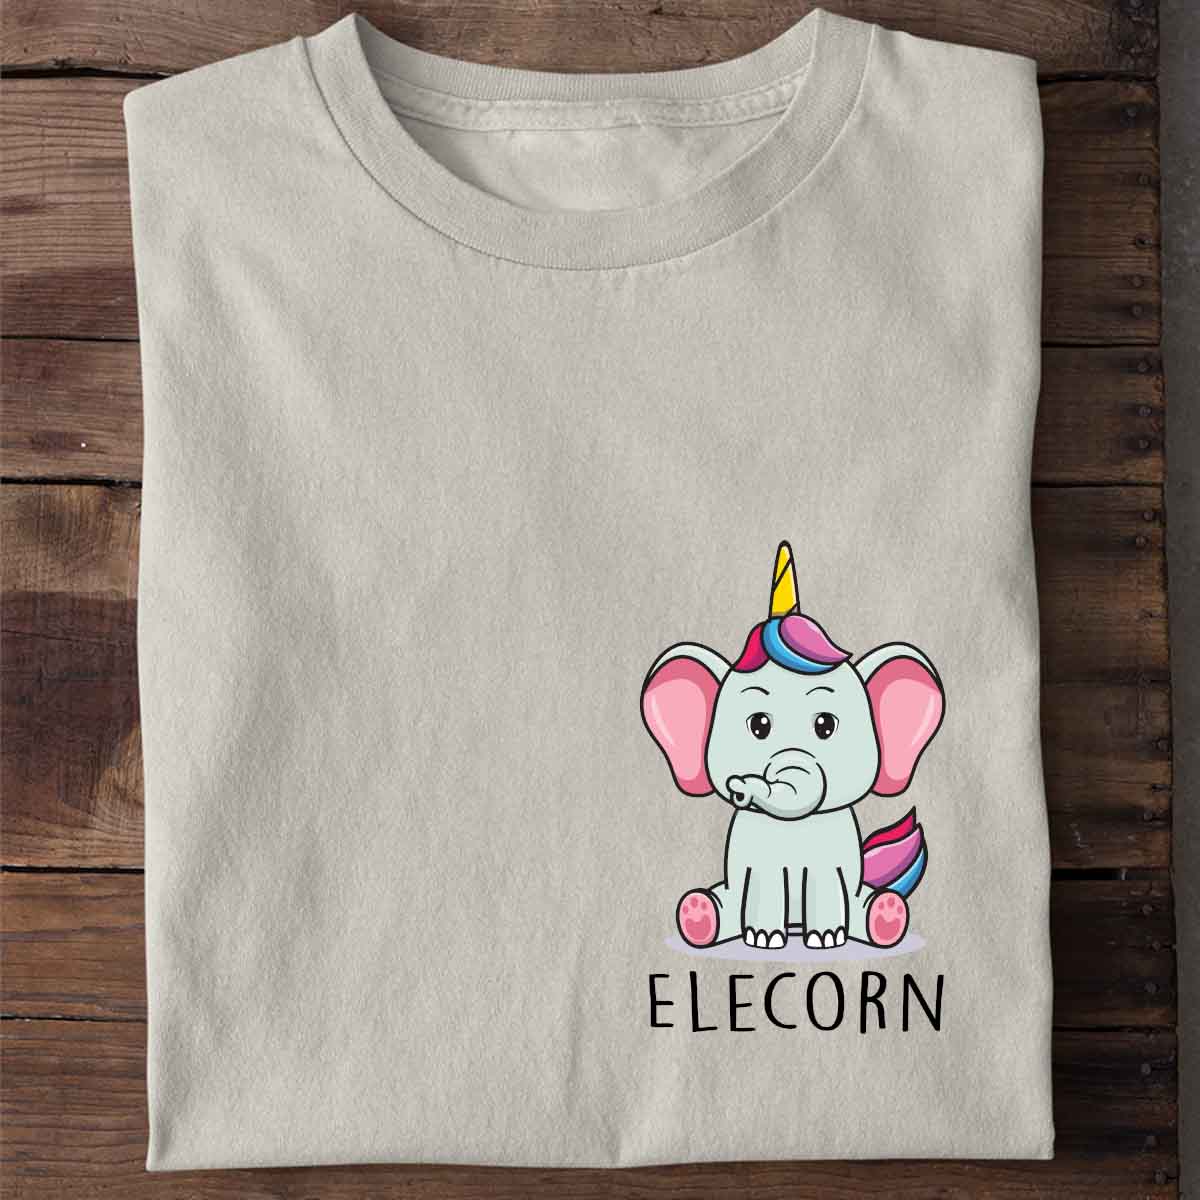 Elecorn - Shirt Unisex Chest